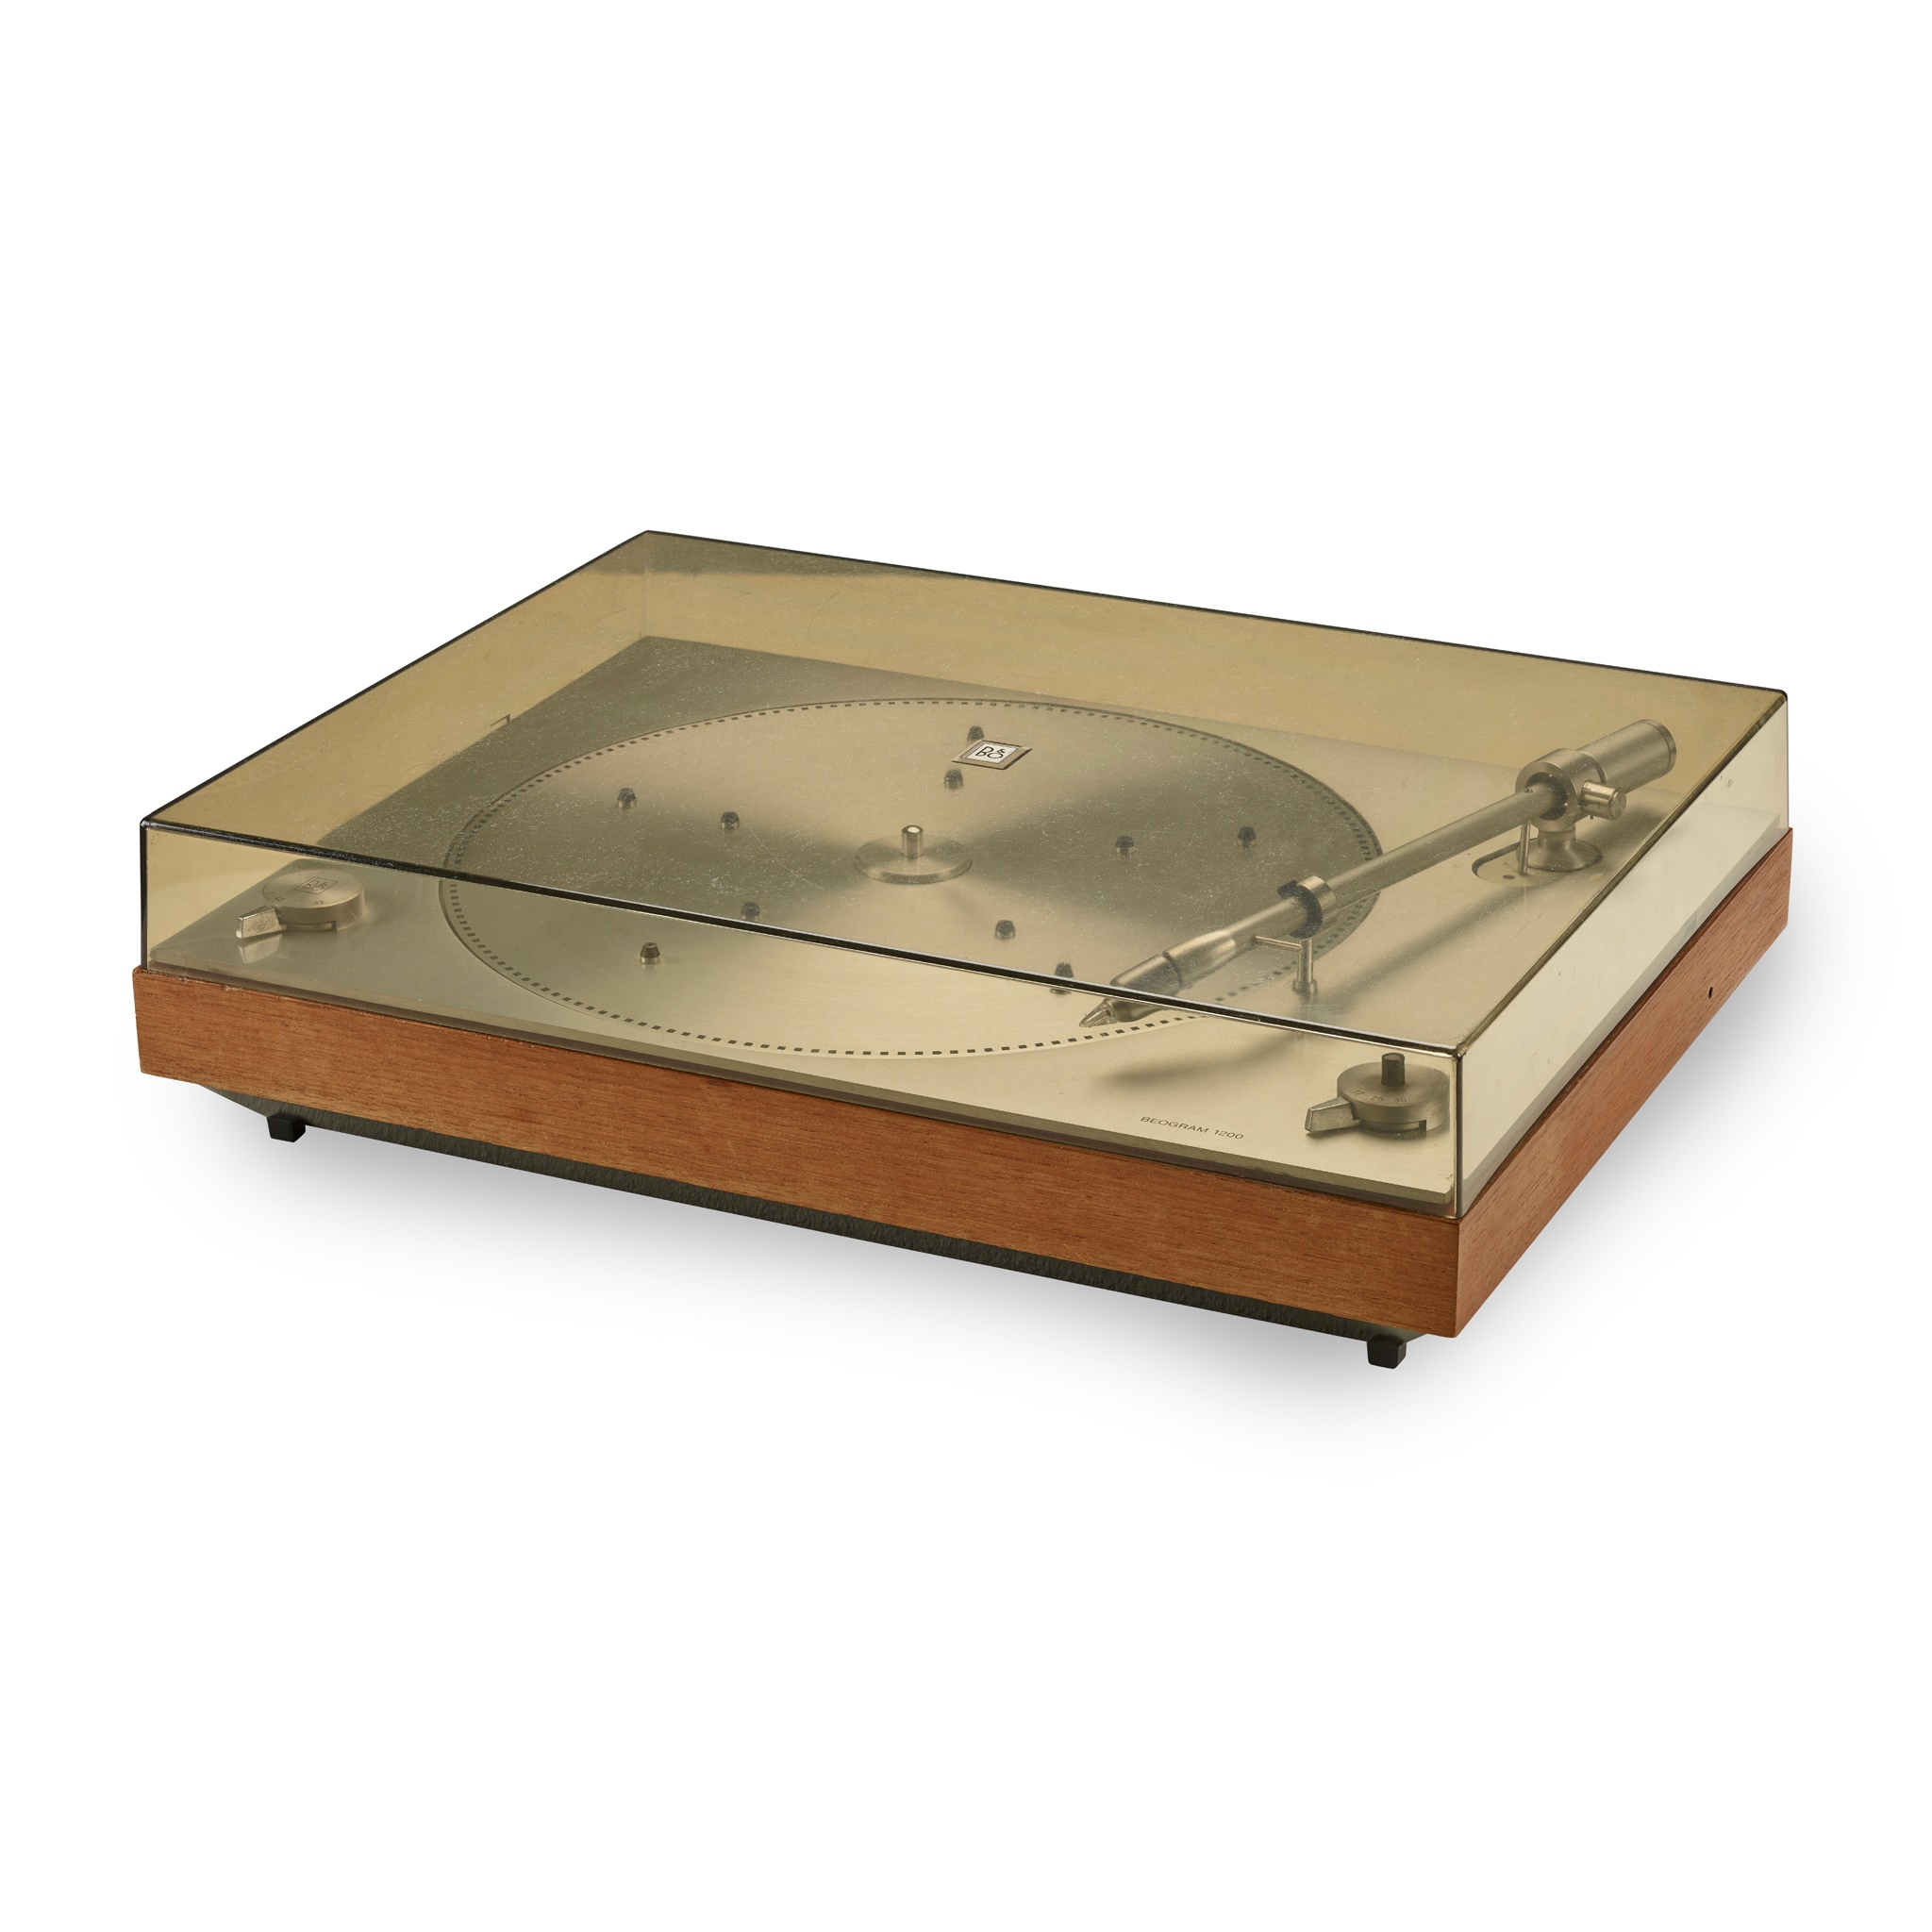 Jacob Jensen (Danish 1926-2015) for Bang & Olufsen 'Beogram 1200' Record Player, designed 1969 - Image 2 of 4